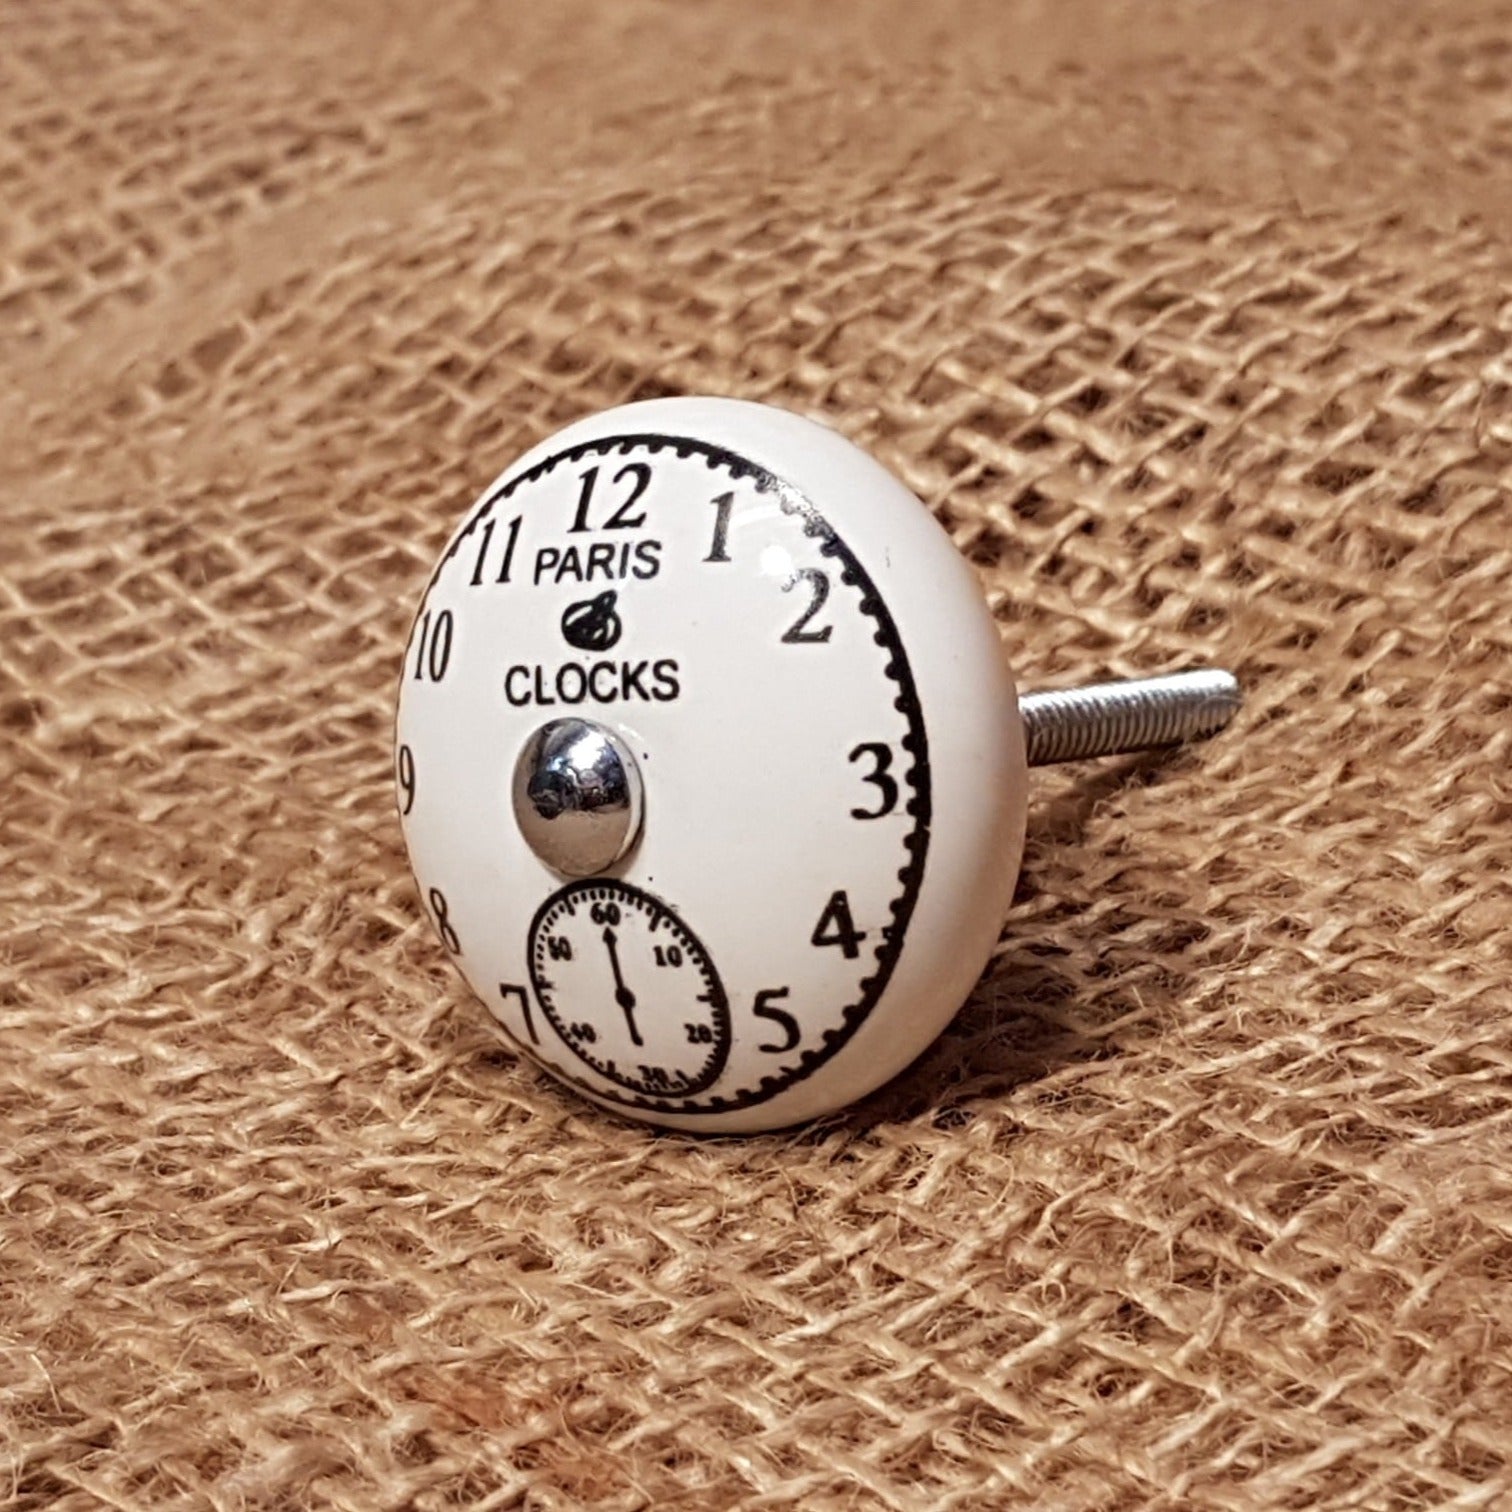 Paris Clocks - Ceramic Drawer Knob - Spearhead Collection - Drawer Knobs - Ceramic, Drawer Knobs, Hardware, Millwork Hardware